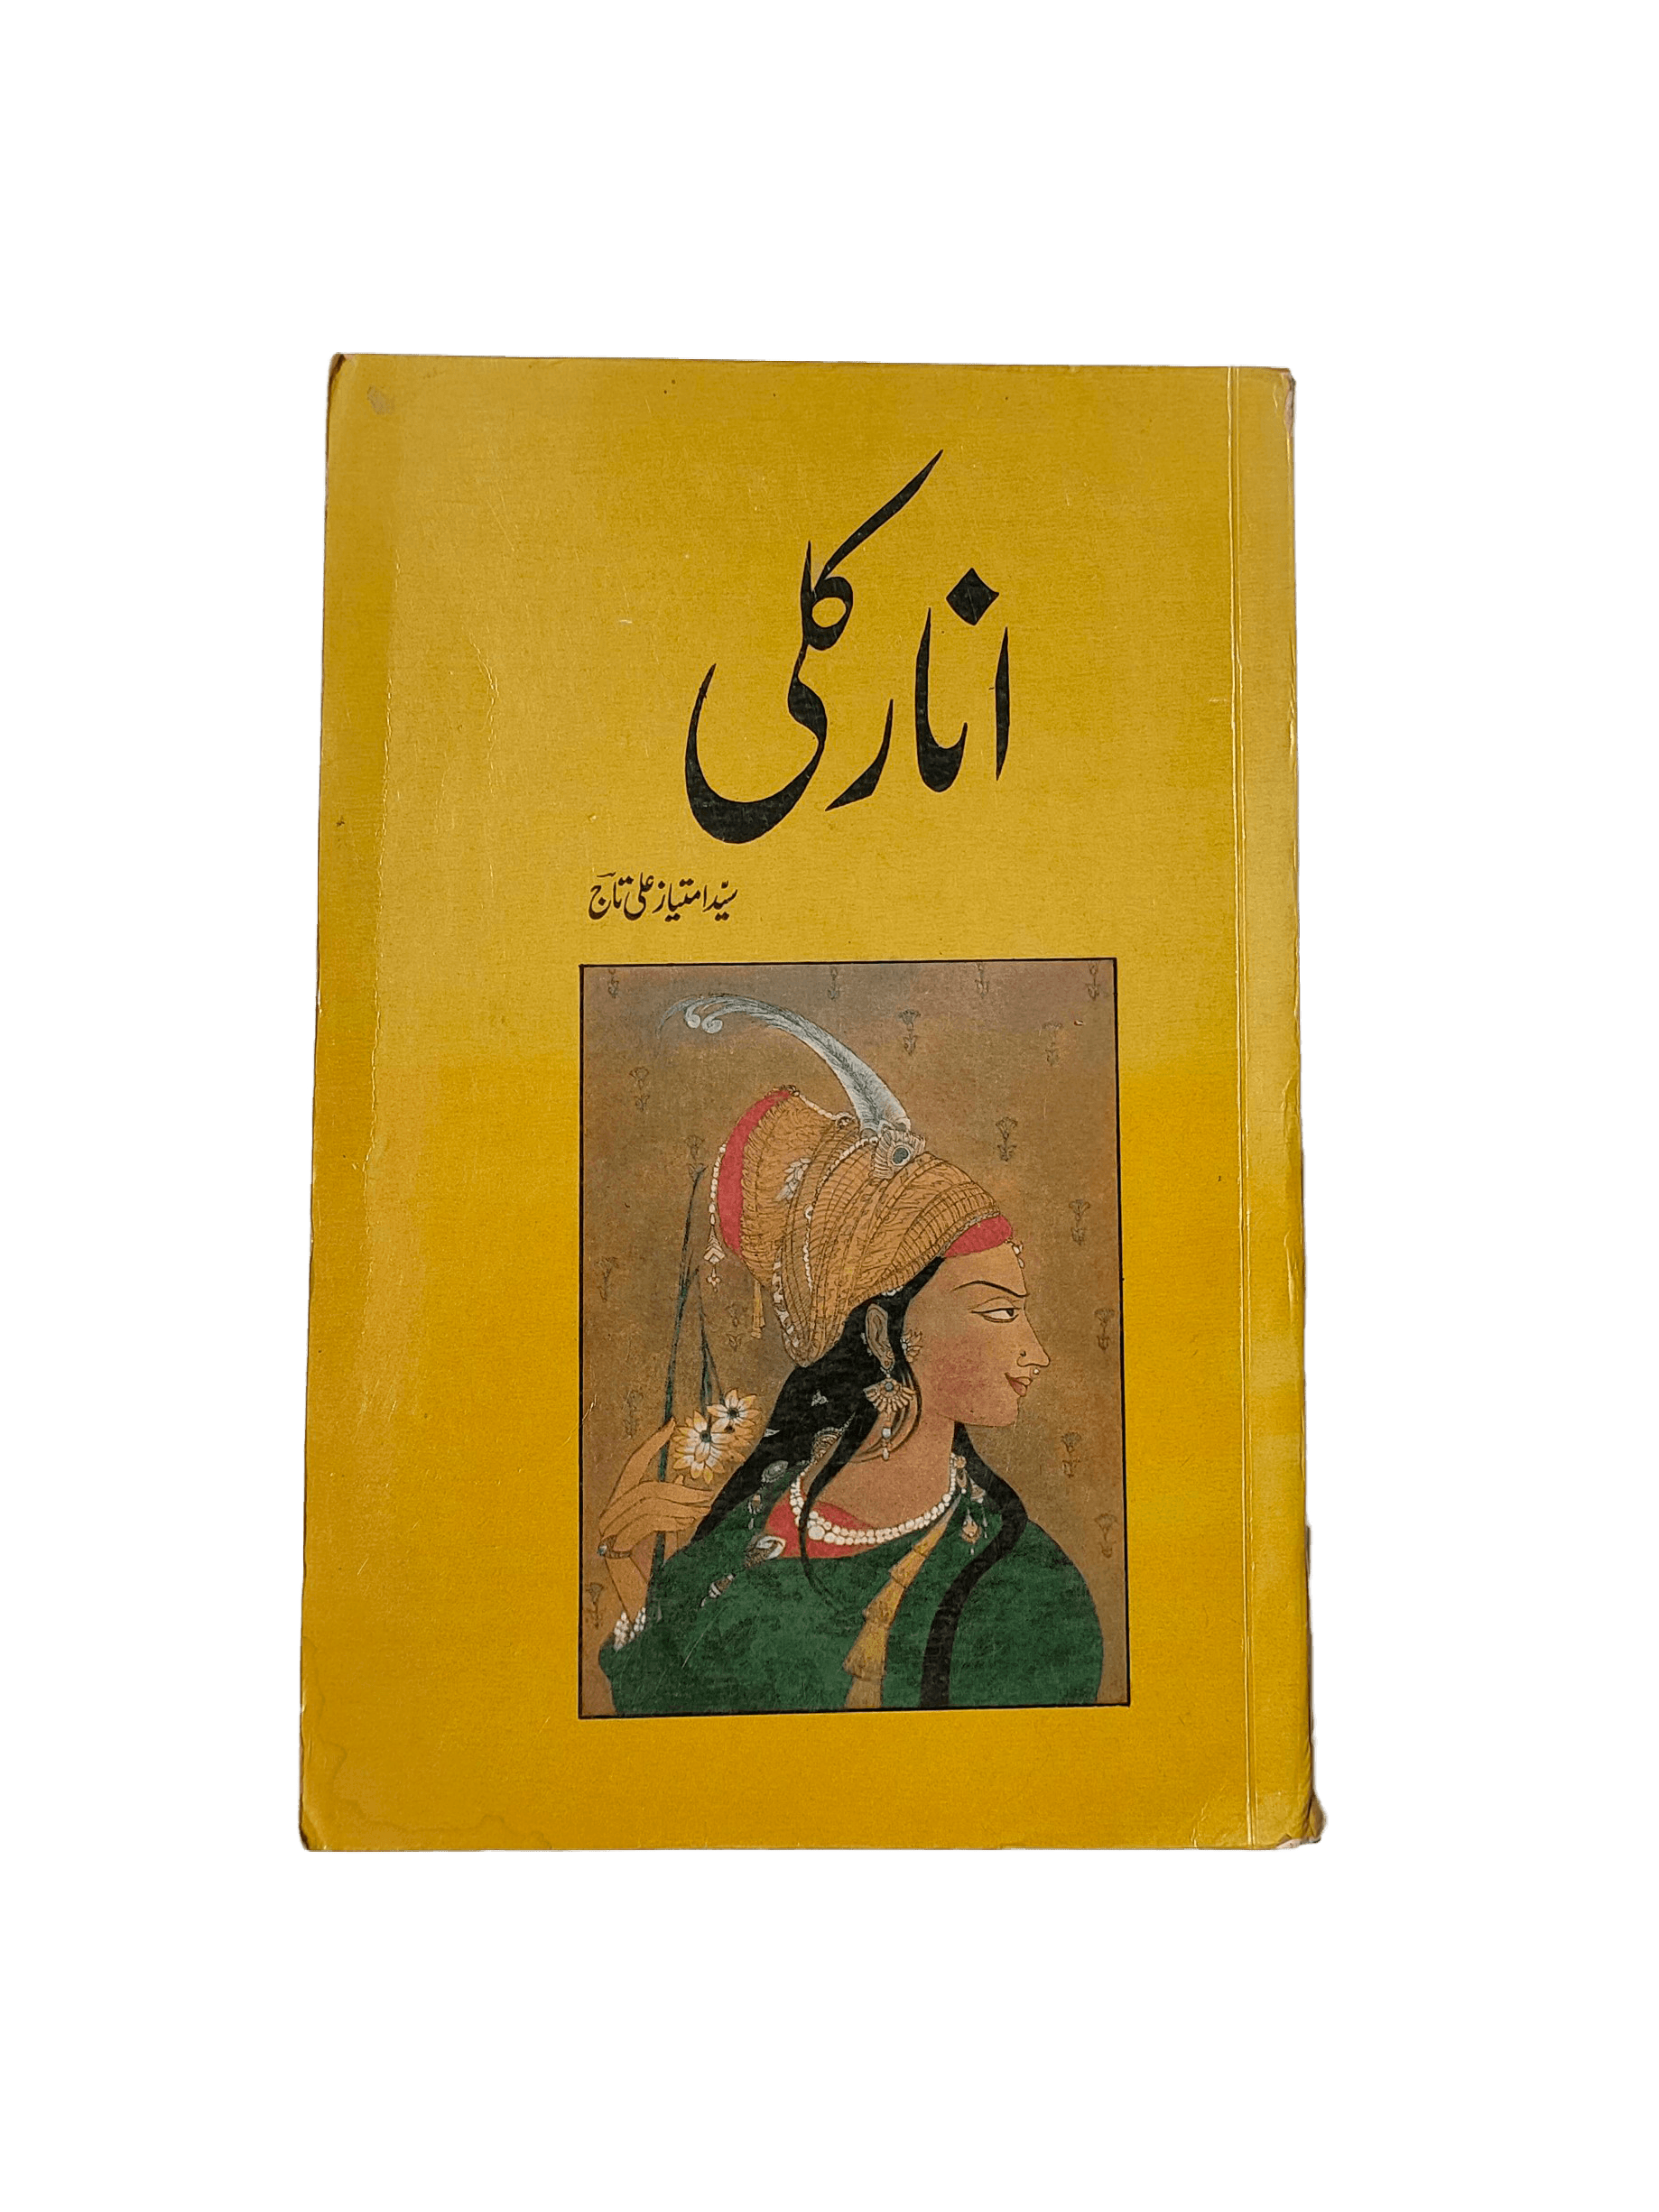 Anarkali (The Historical Figure from the Mughal Era) - KHAJISTAN™